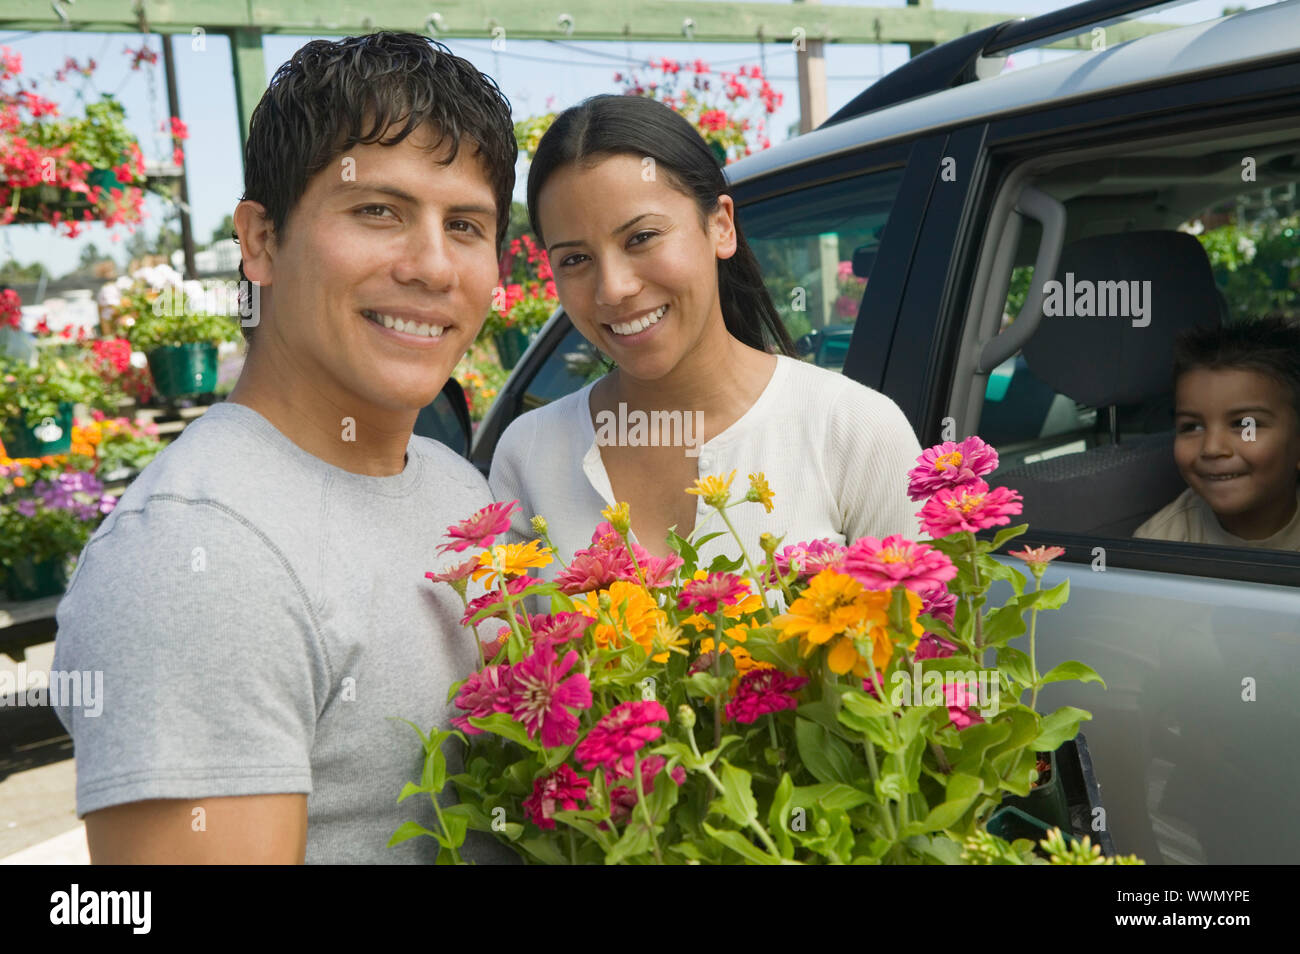 Couple Loading Plants into Minivan Stock Photo